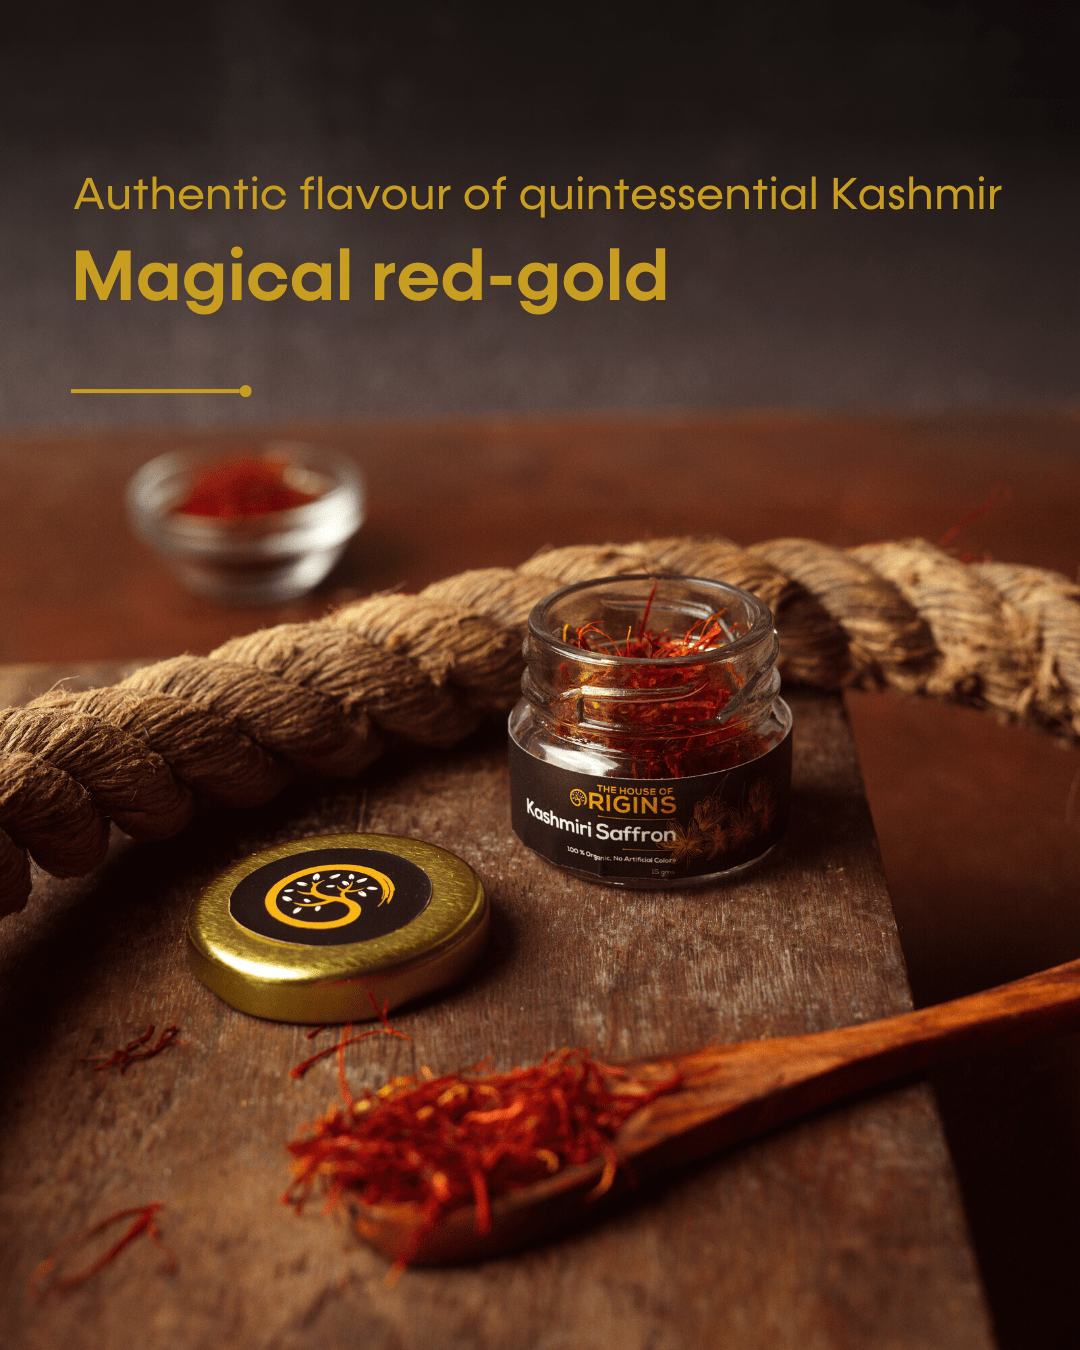 The House of Origins original Kashmiri saffron